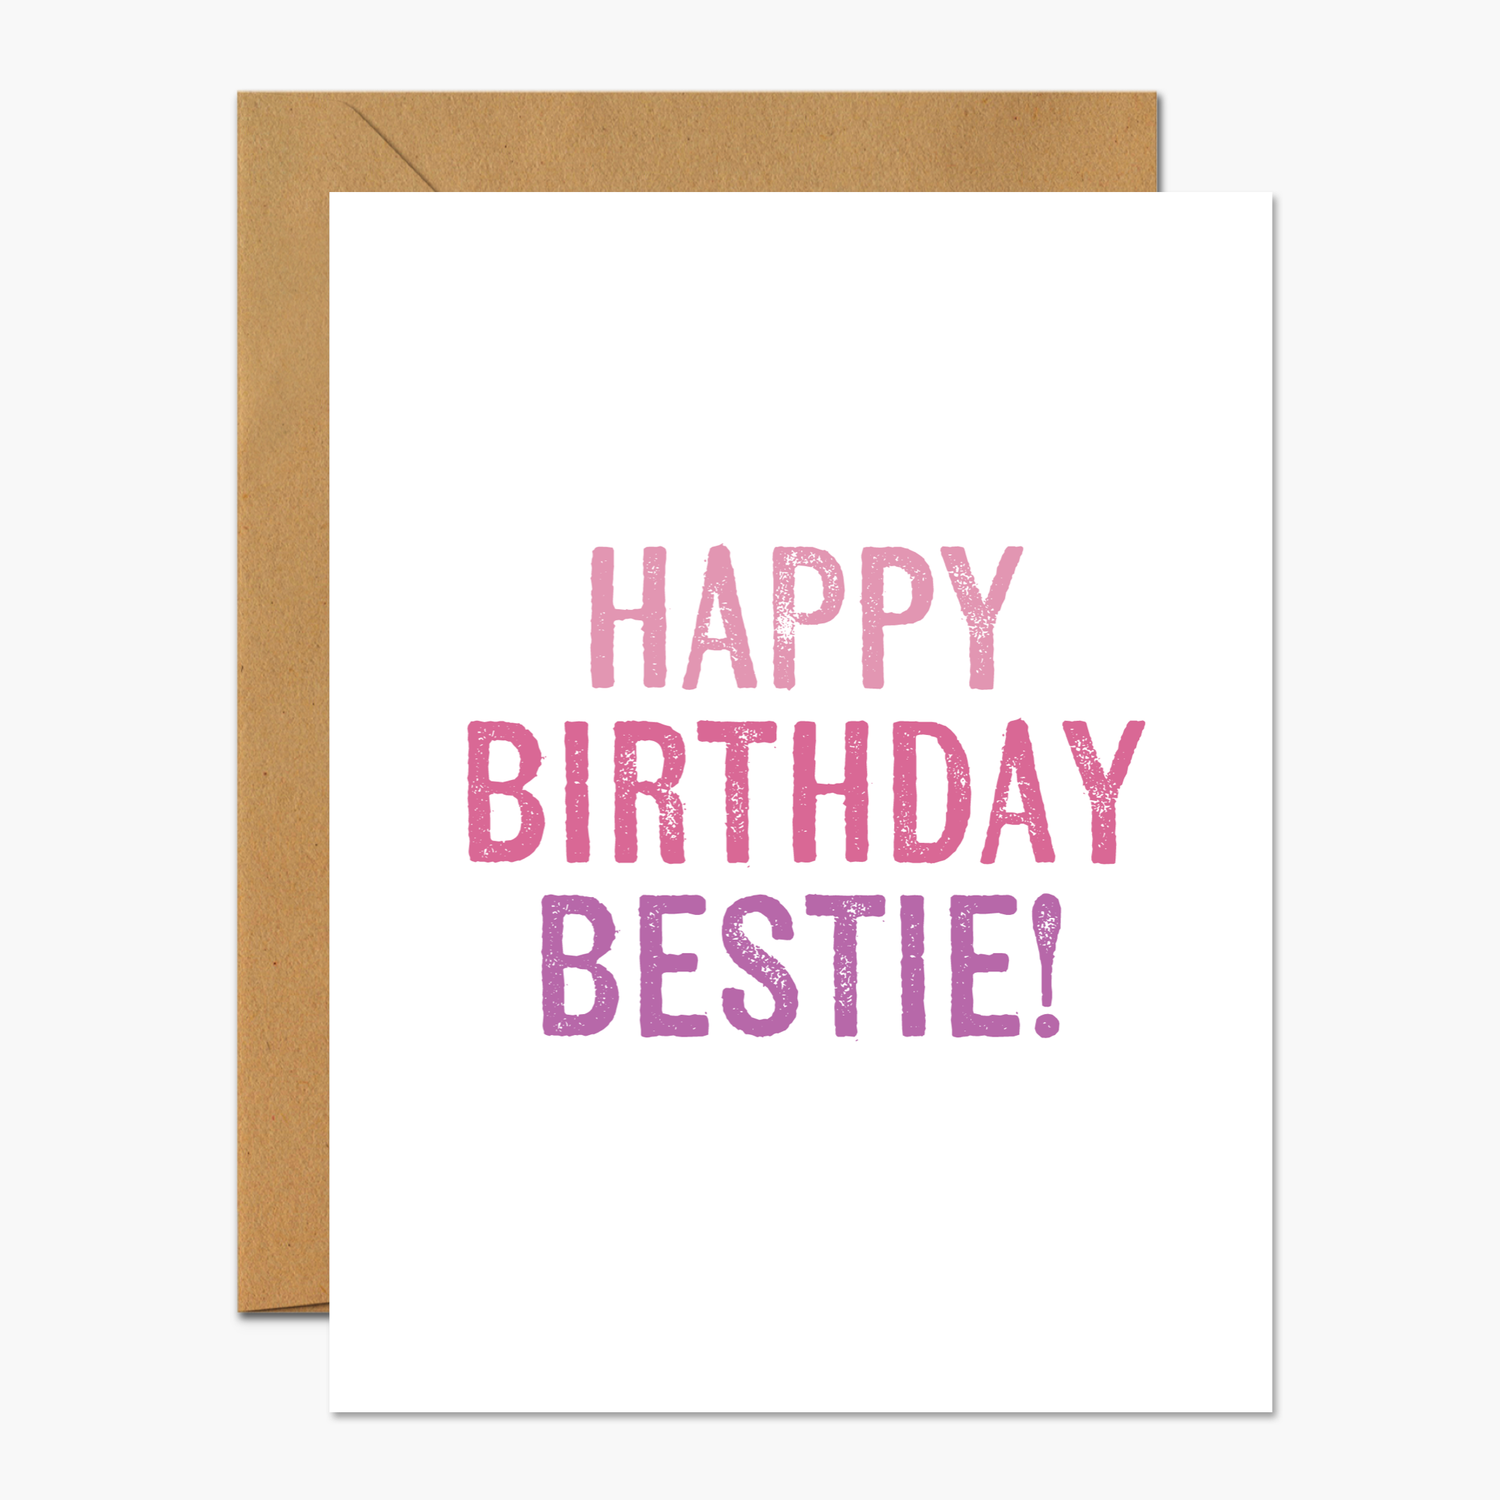 Happy Birthday Bestie! Block Print - Birthday Greeting Card